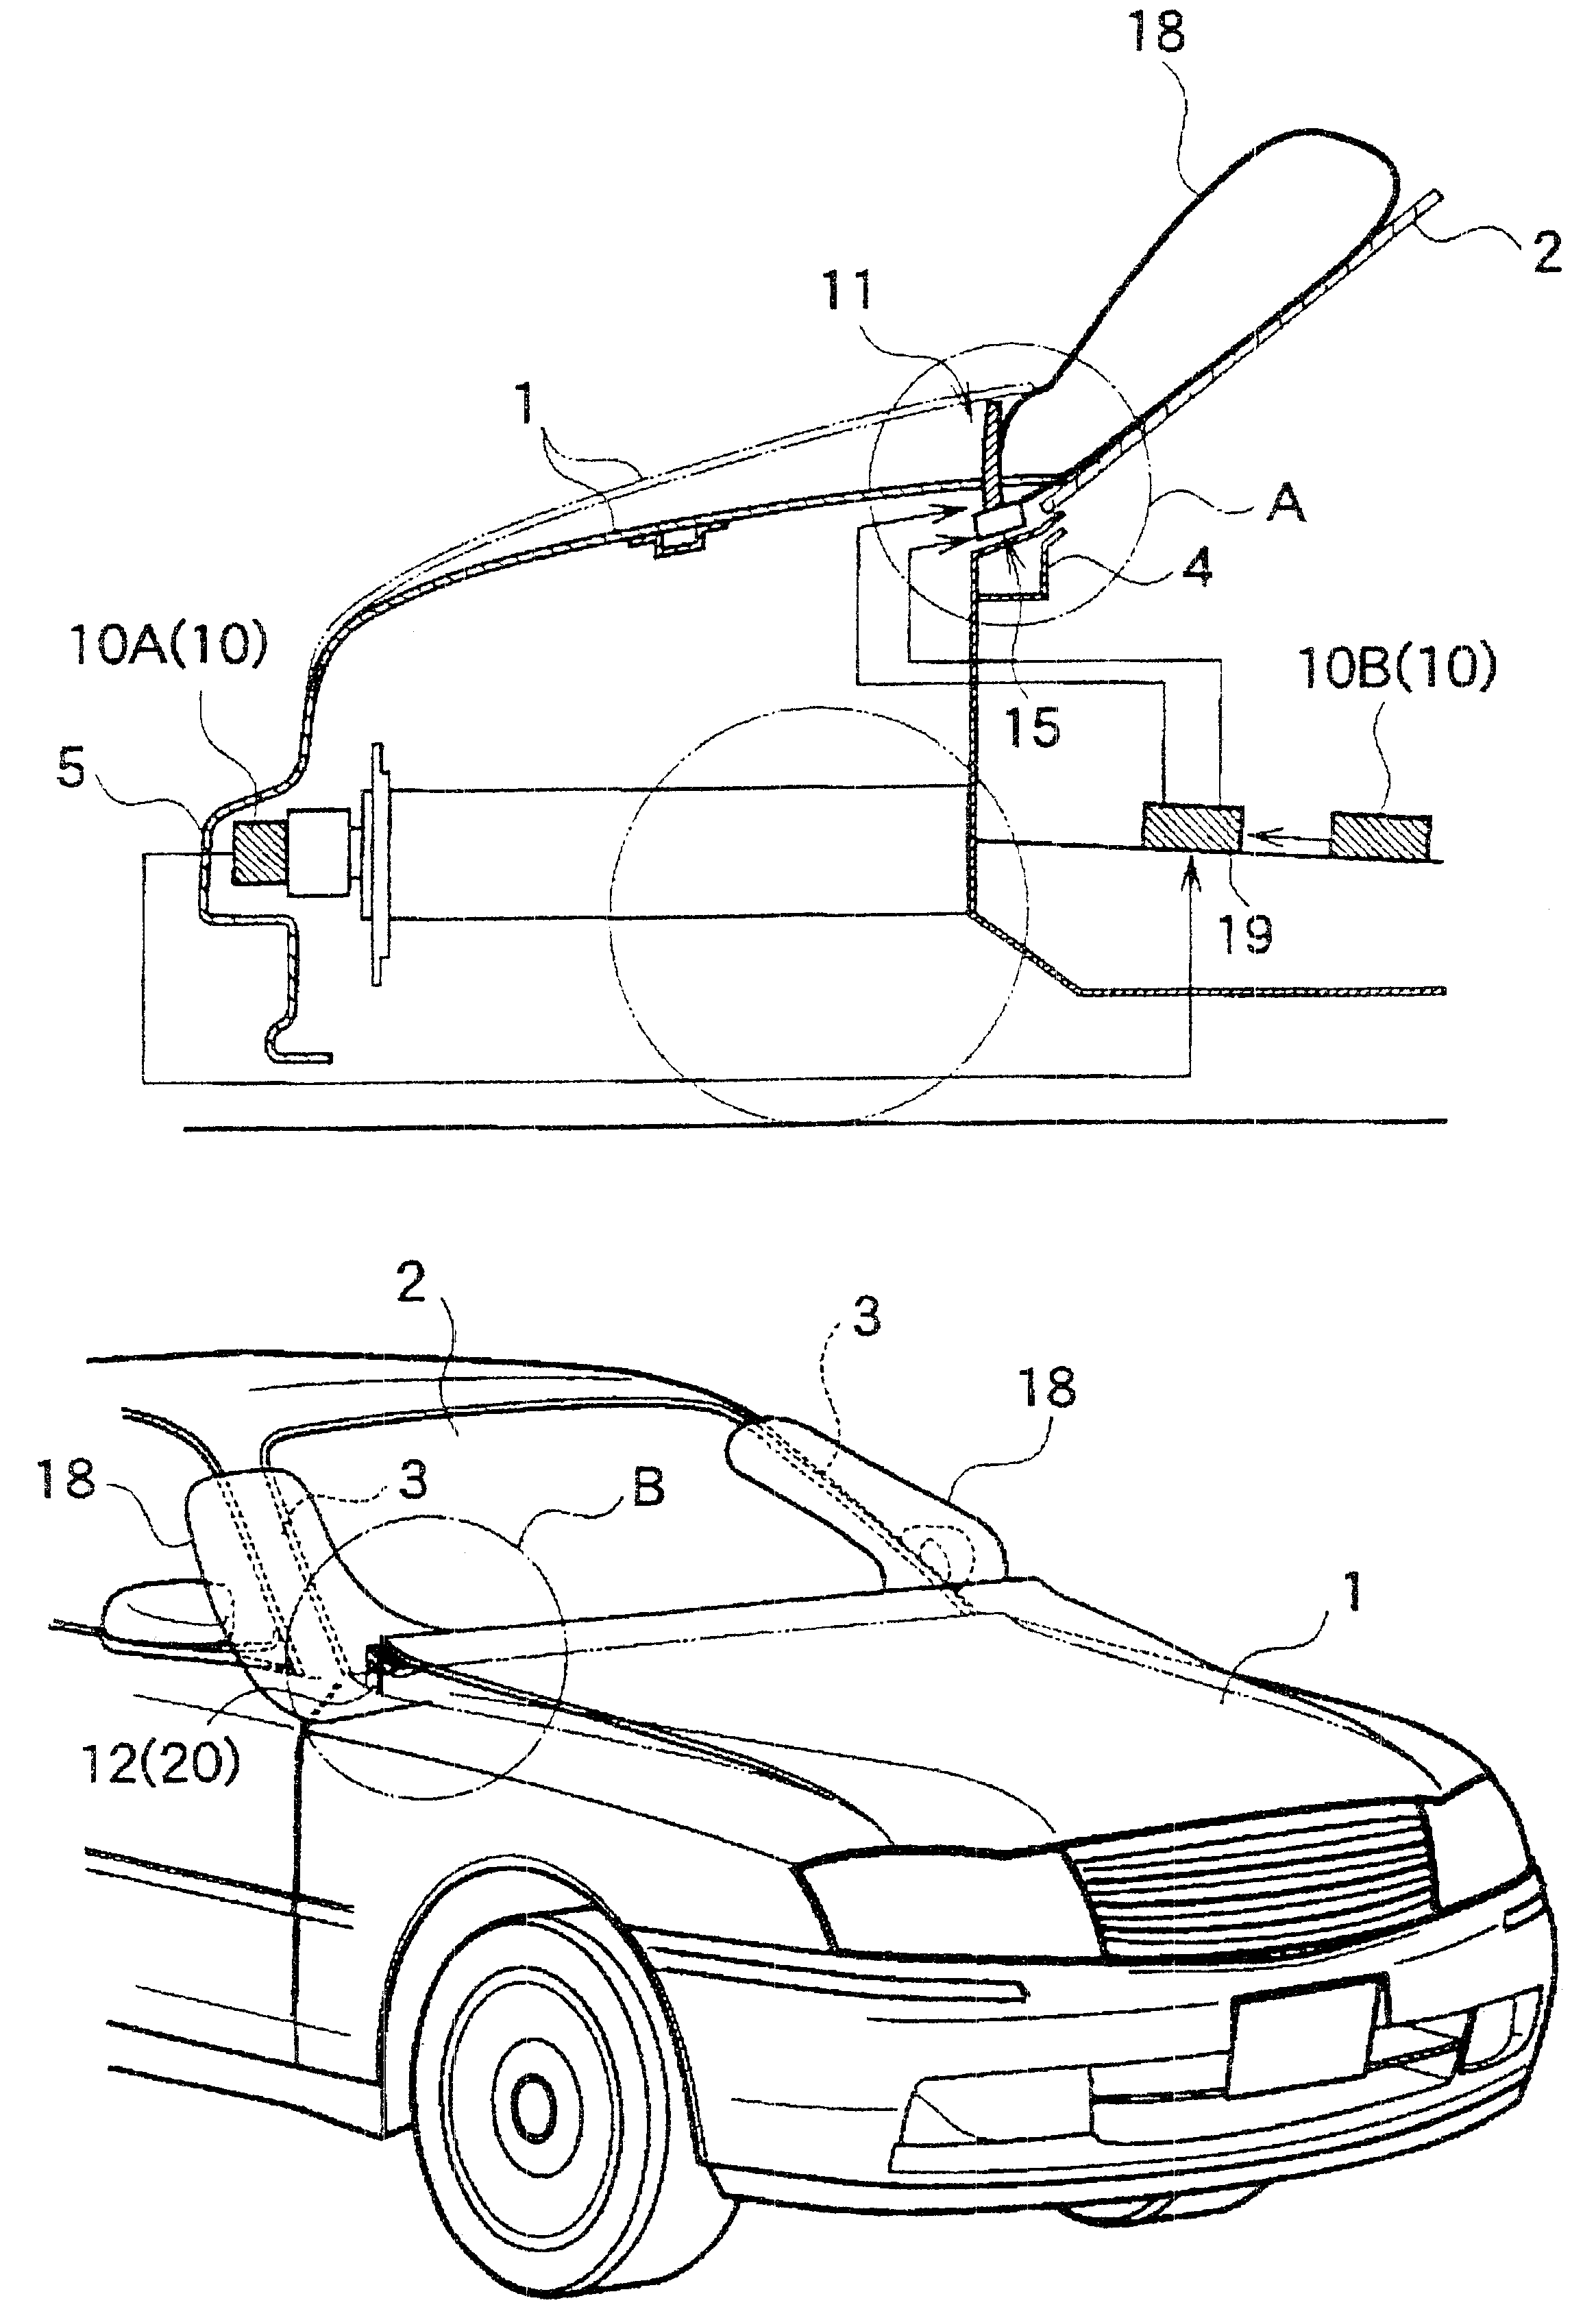 Vehicle air bag system